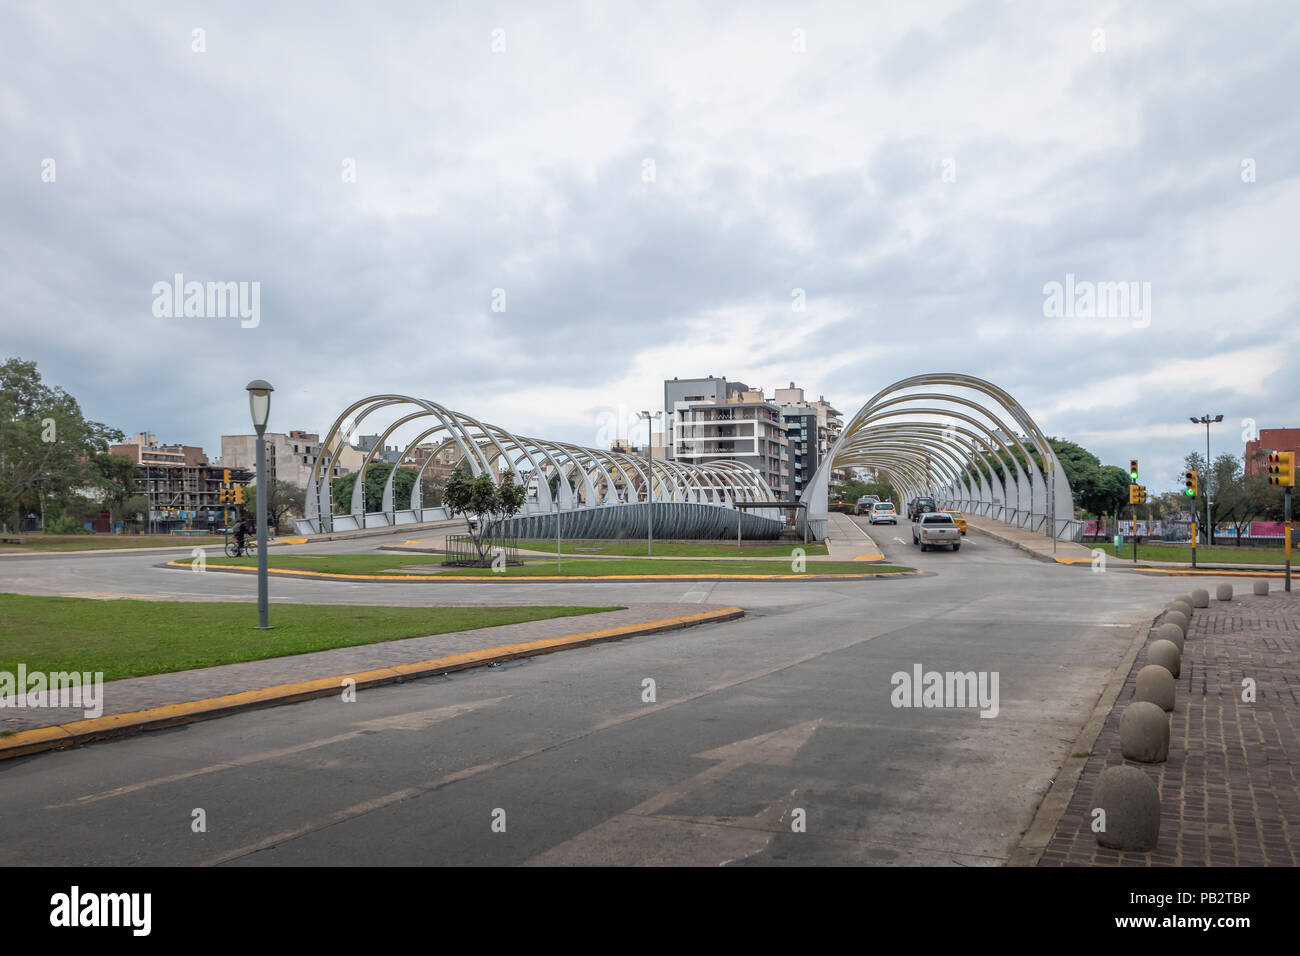 Puente del Bicentenario (Bicentenary Bridge) - Cordoba, Argentina Stock Photo